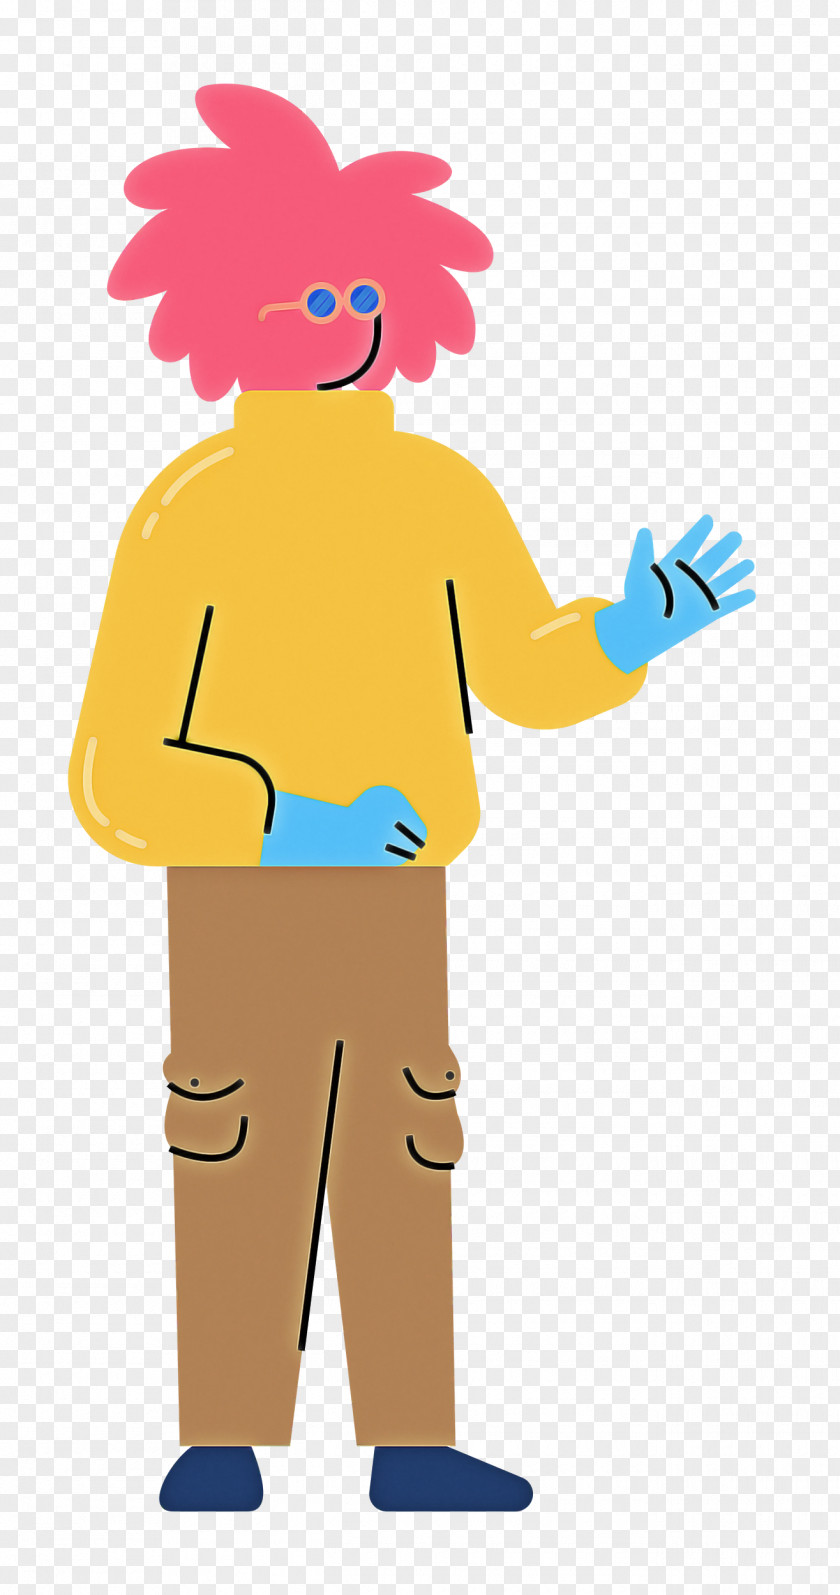 Costume Cartoon Mascot Human Character PNG